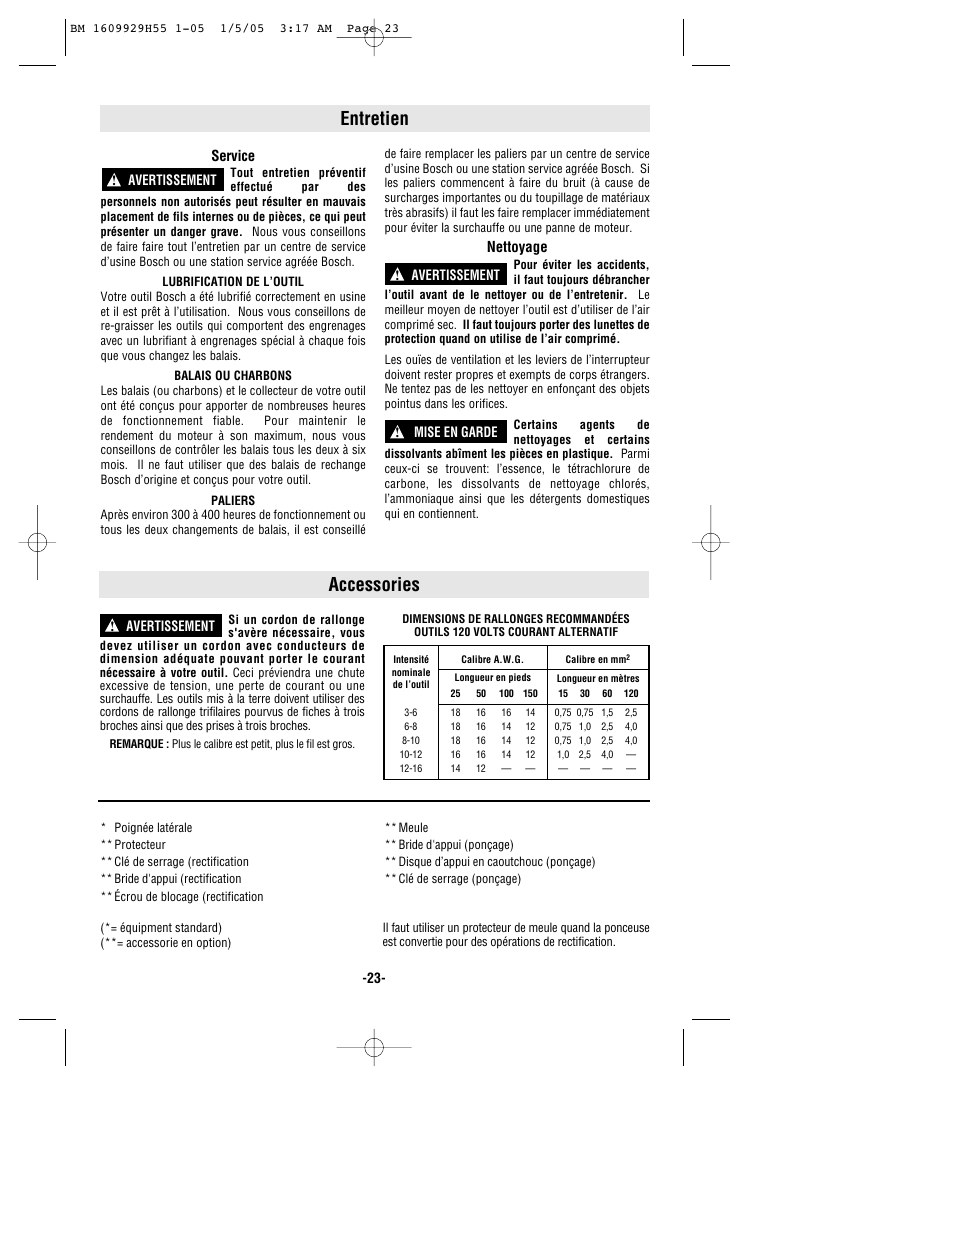 Entretien accessories | Bosch classixx 1853-5 User Manual | Page 23 / 36 |  Original mode